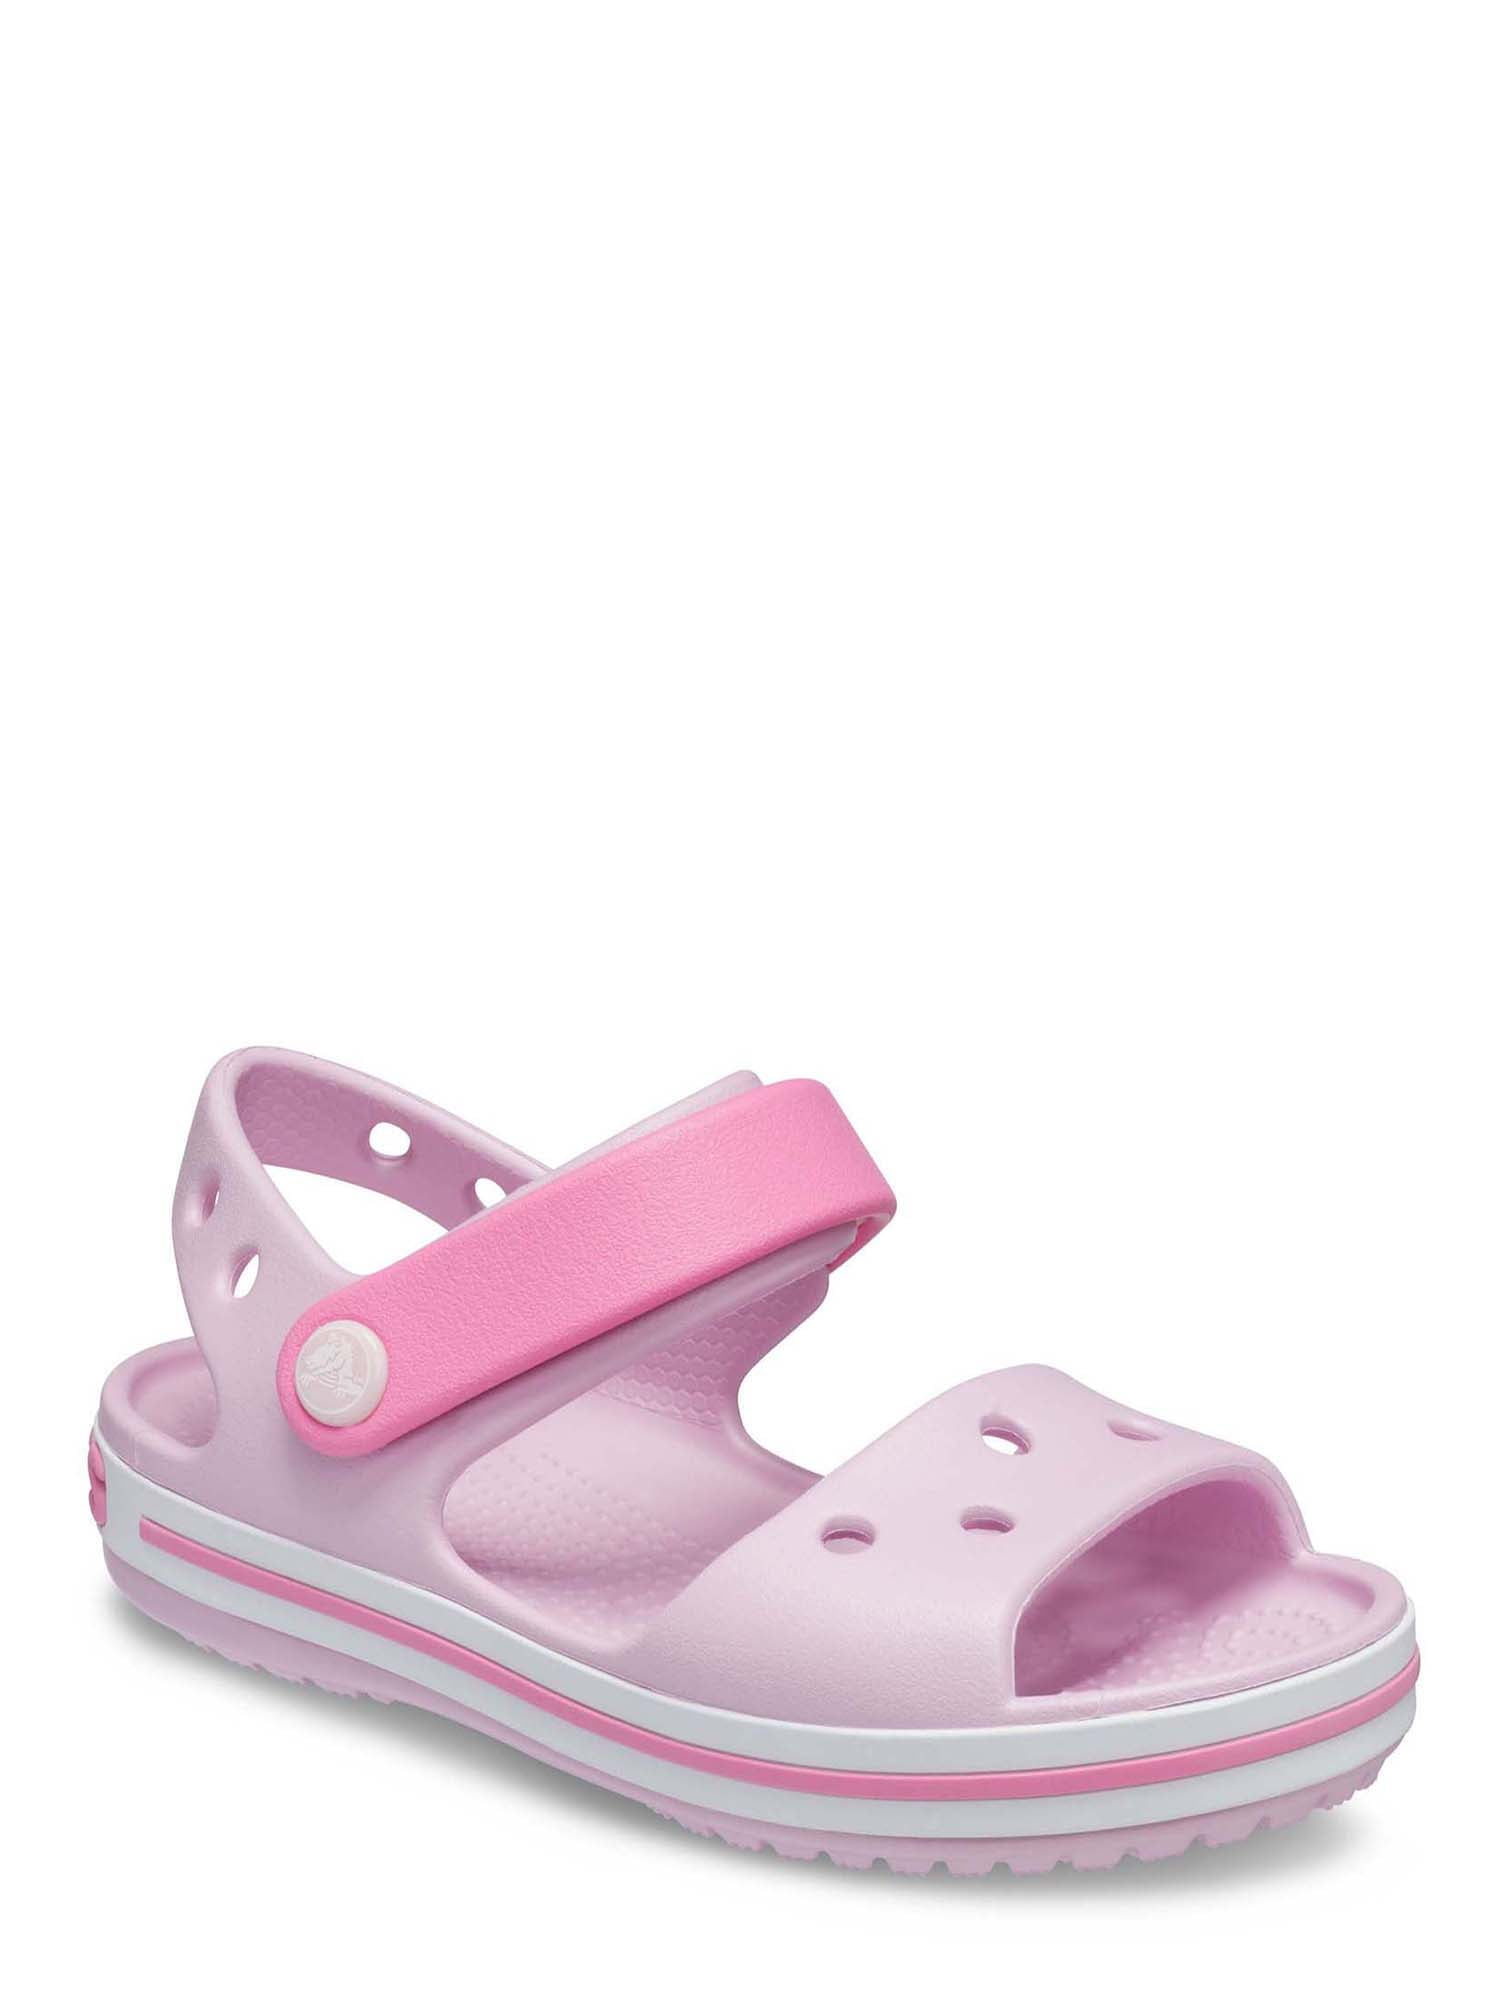 Goed opgeleid zuur Persona Crocs Toddler & Kids Crocband Sandal, Sizes 4-5 - Walmart.com